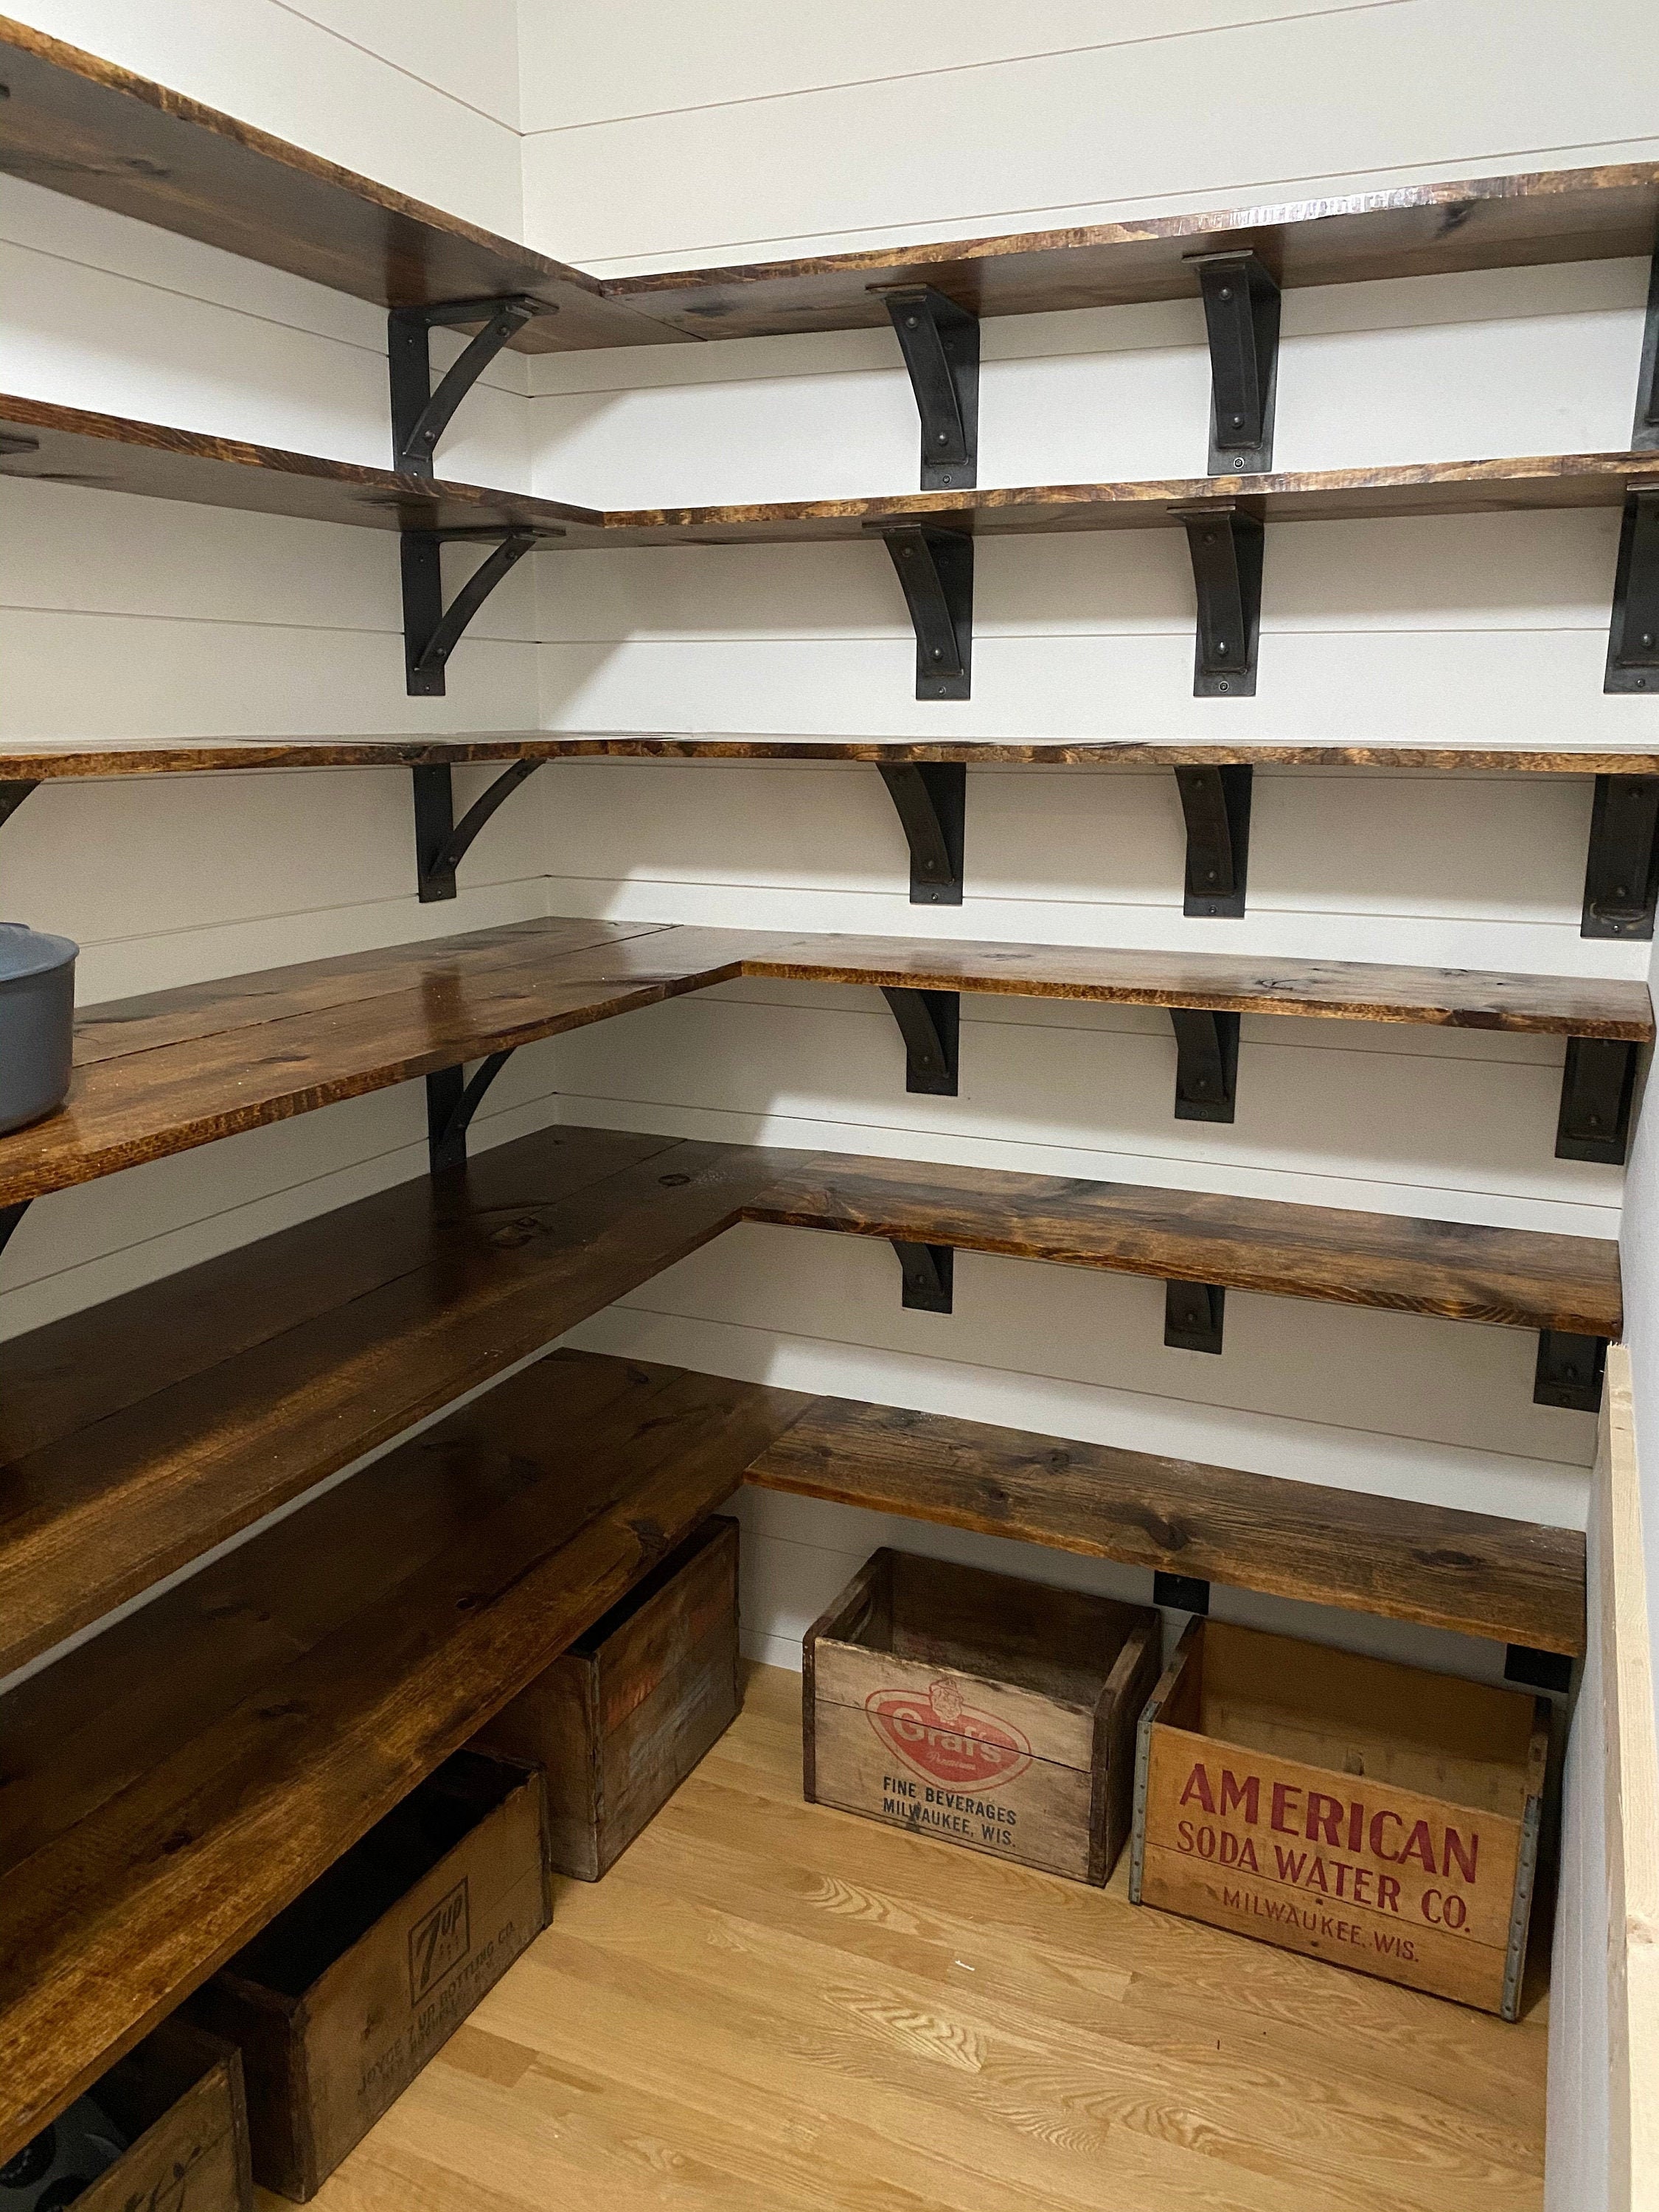 Shelves Shelf Clips for Wood Shelving Shelf Support Clips Metal Shelf Pegs